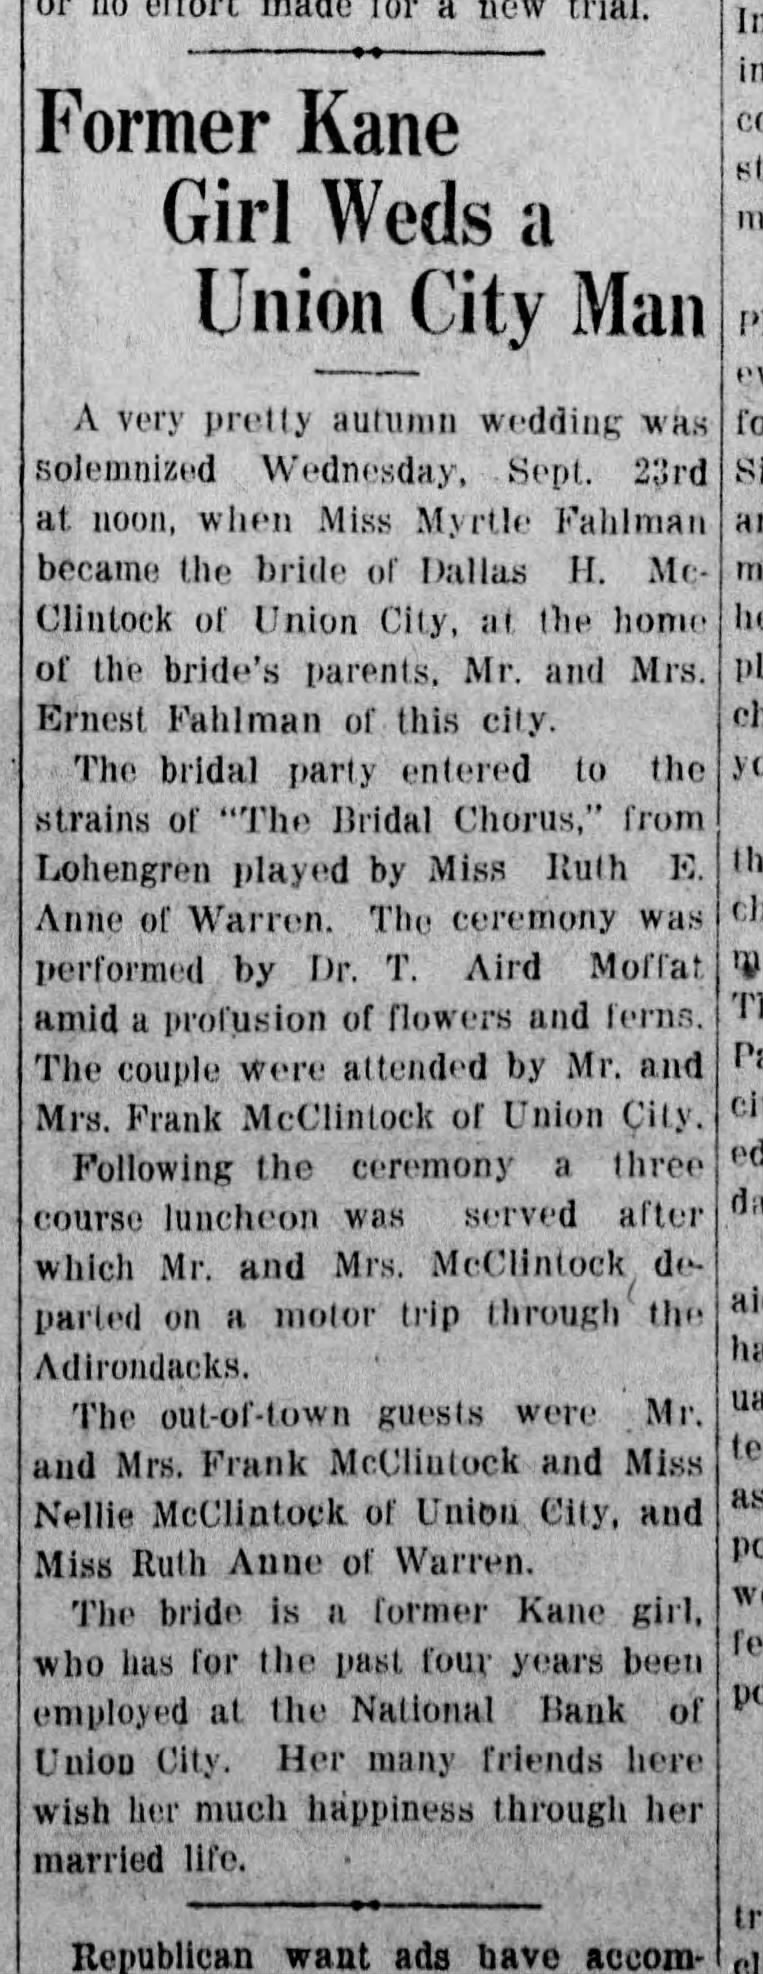 Myrtle Fahlman wedding
September 24, 1925
The Kane Republican
Kane, Pennsylvania